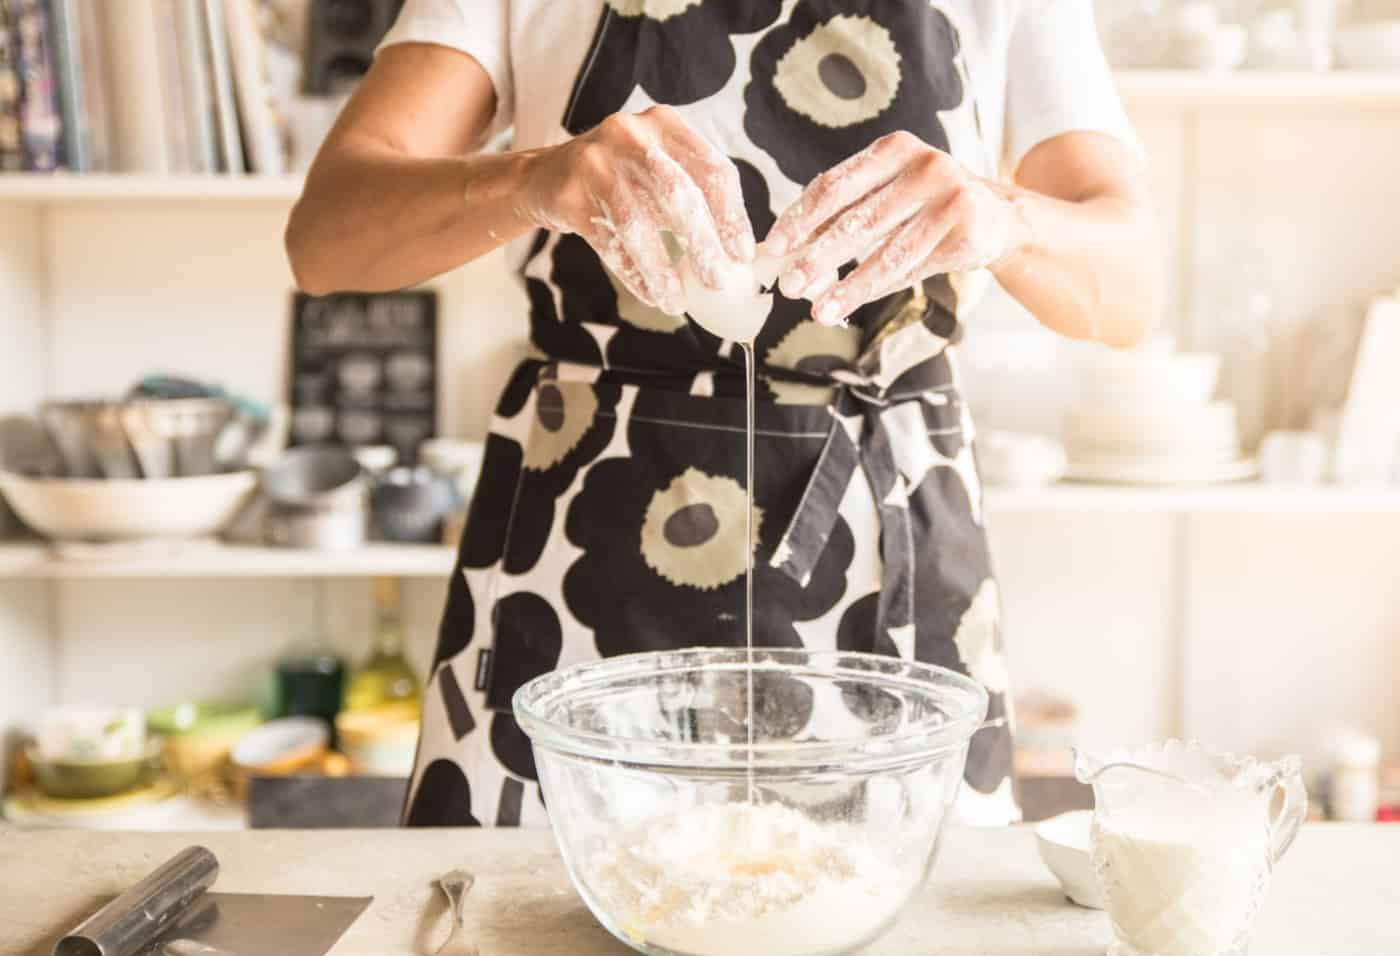 Cracking egg over flour for scones